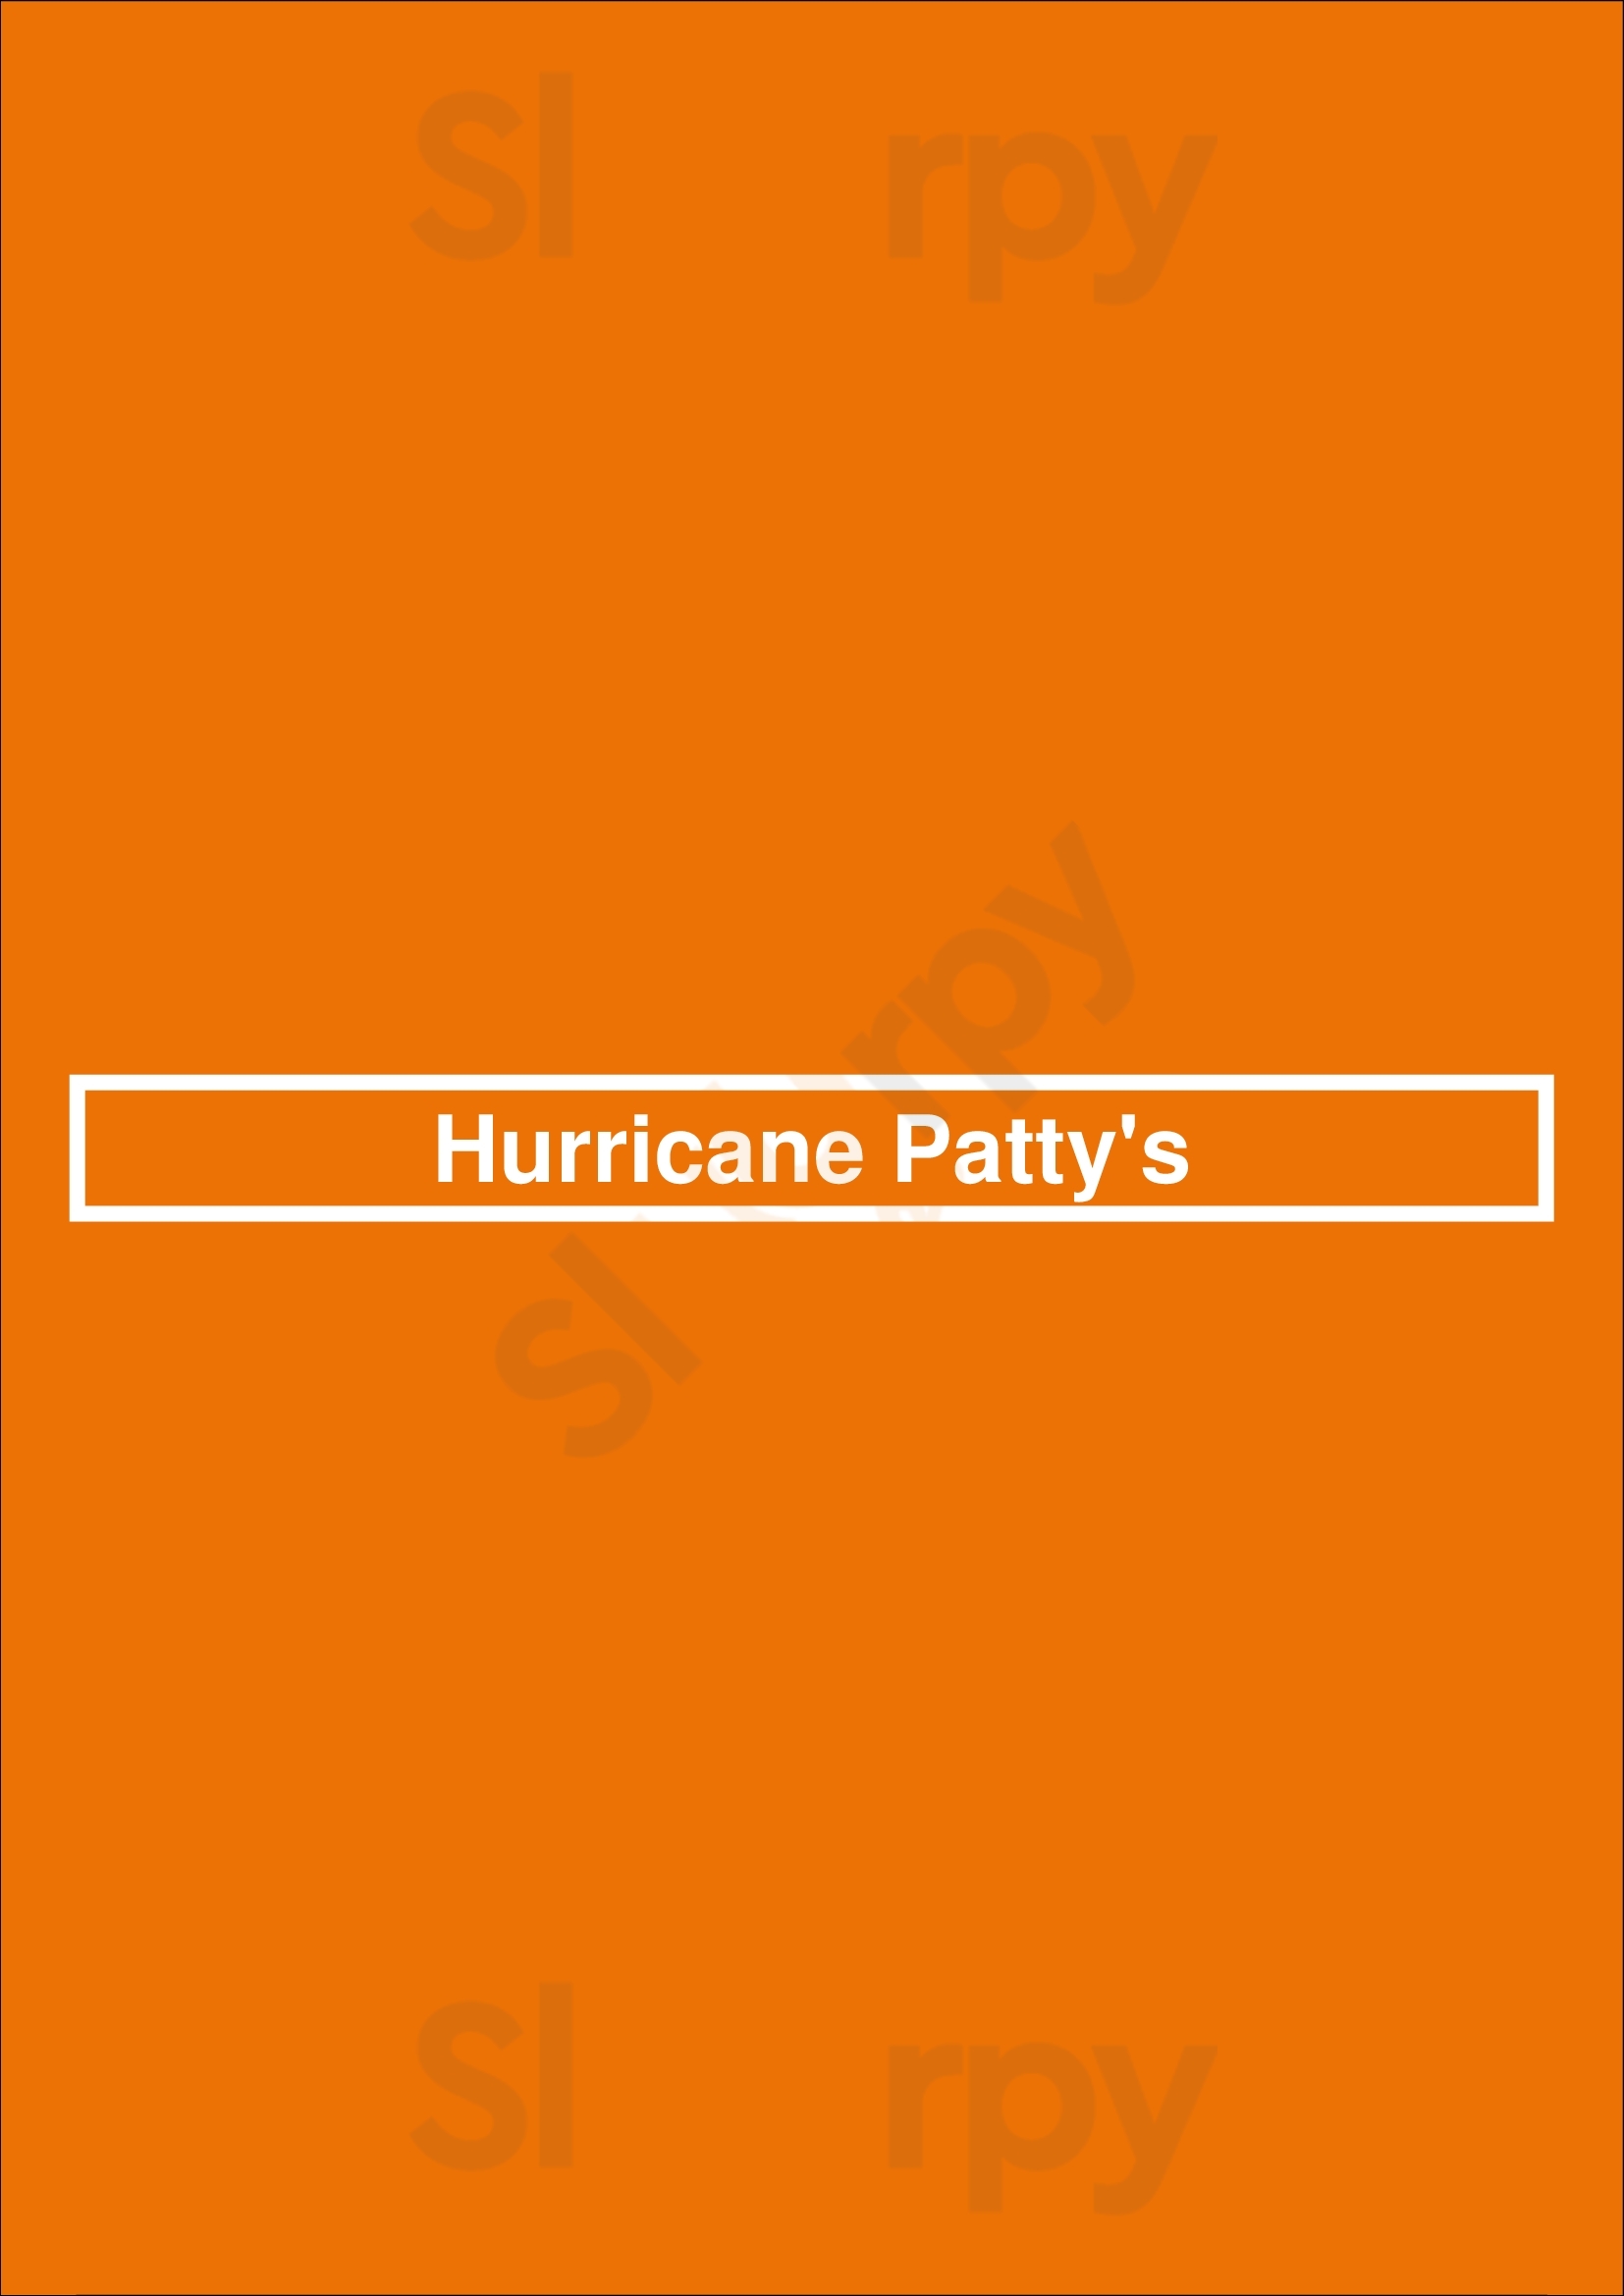 Hurricane Patty's St. Augustine Menu - 1